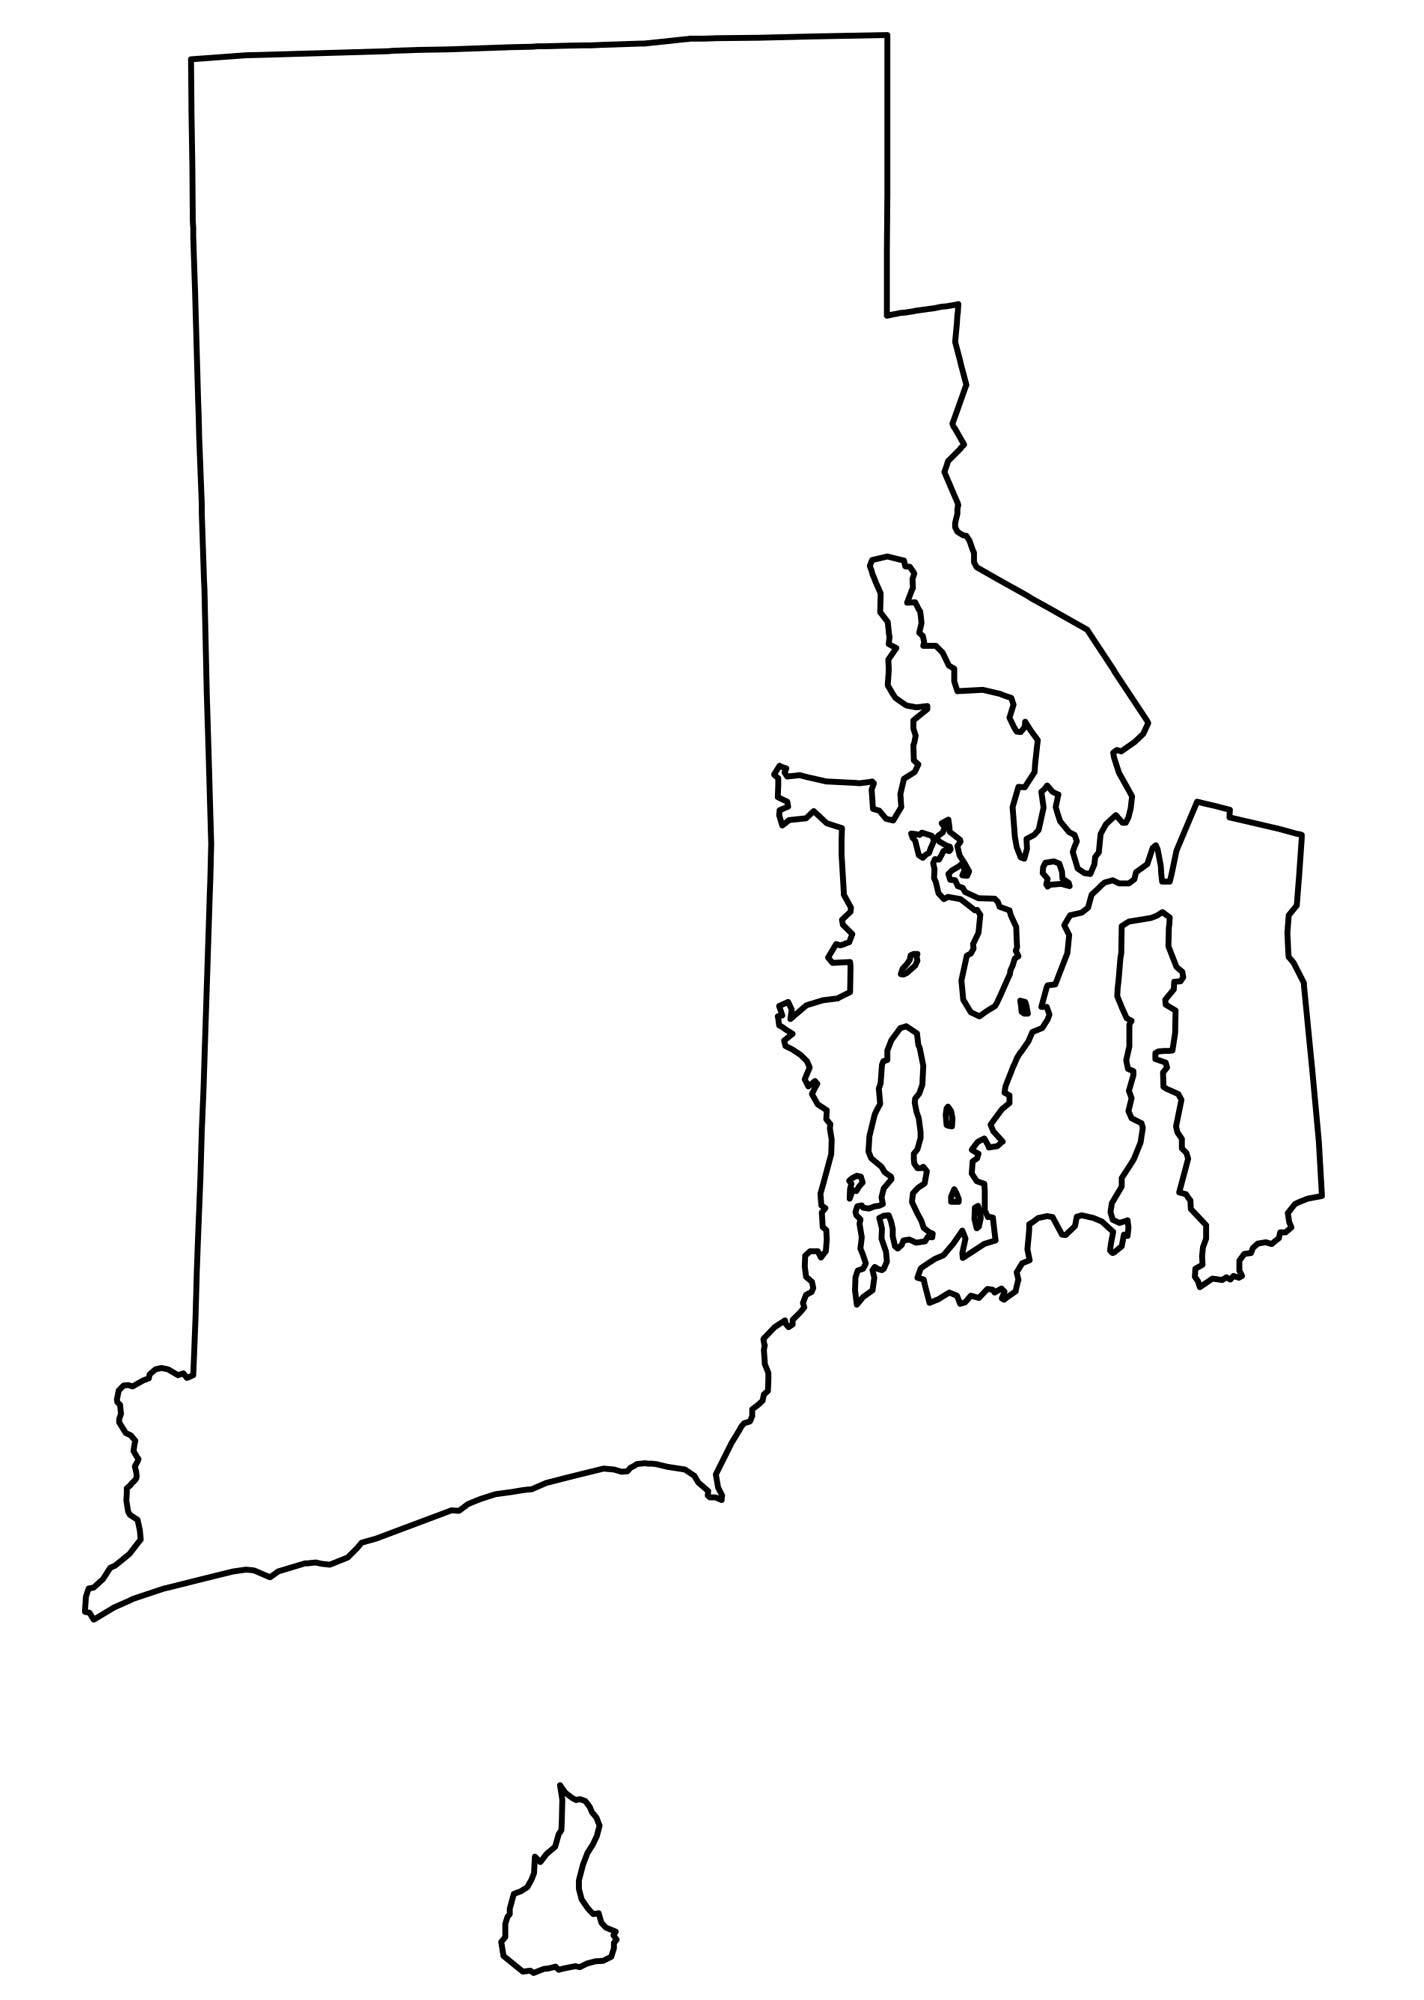 Rhode-Island-Outline-Map.jpg